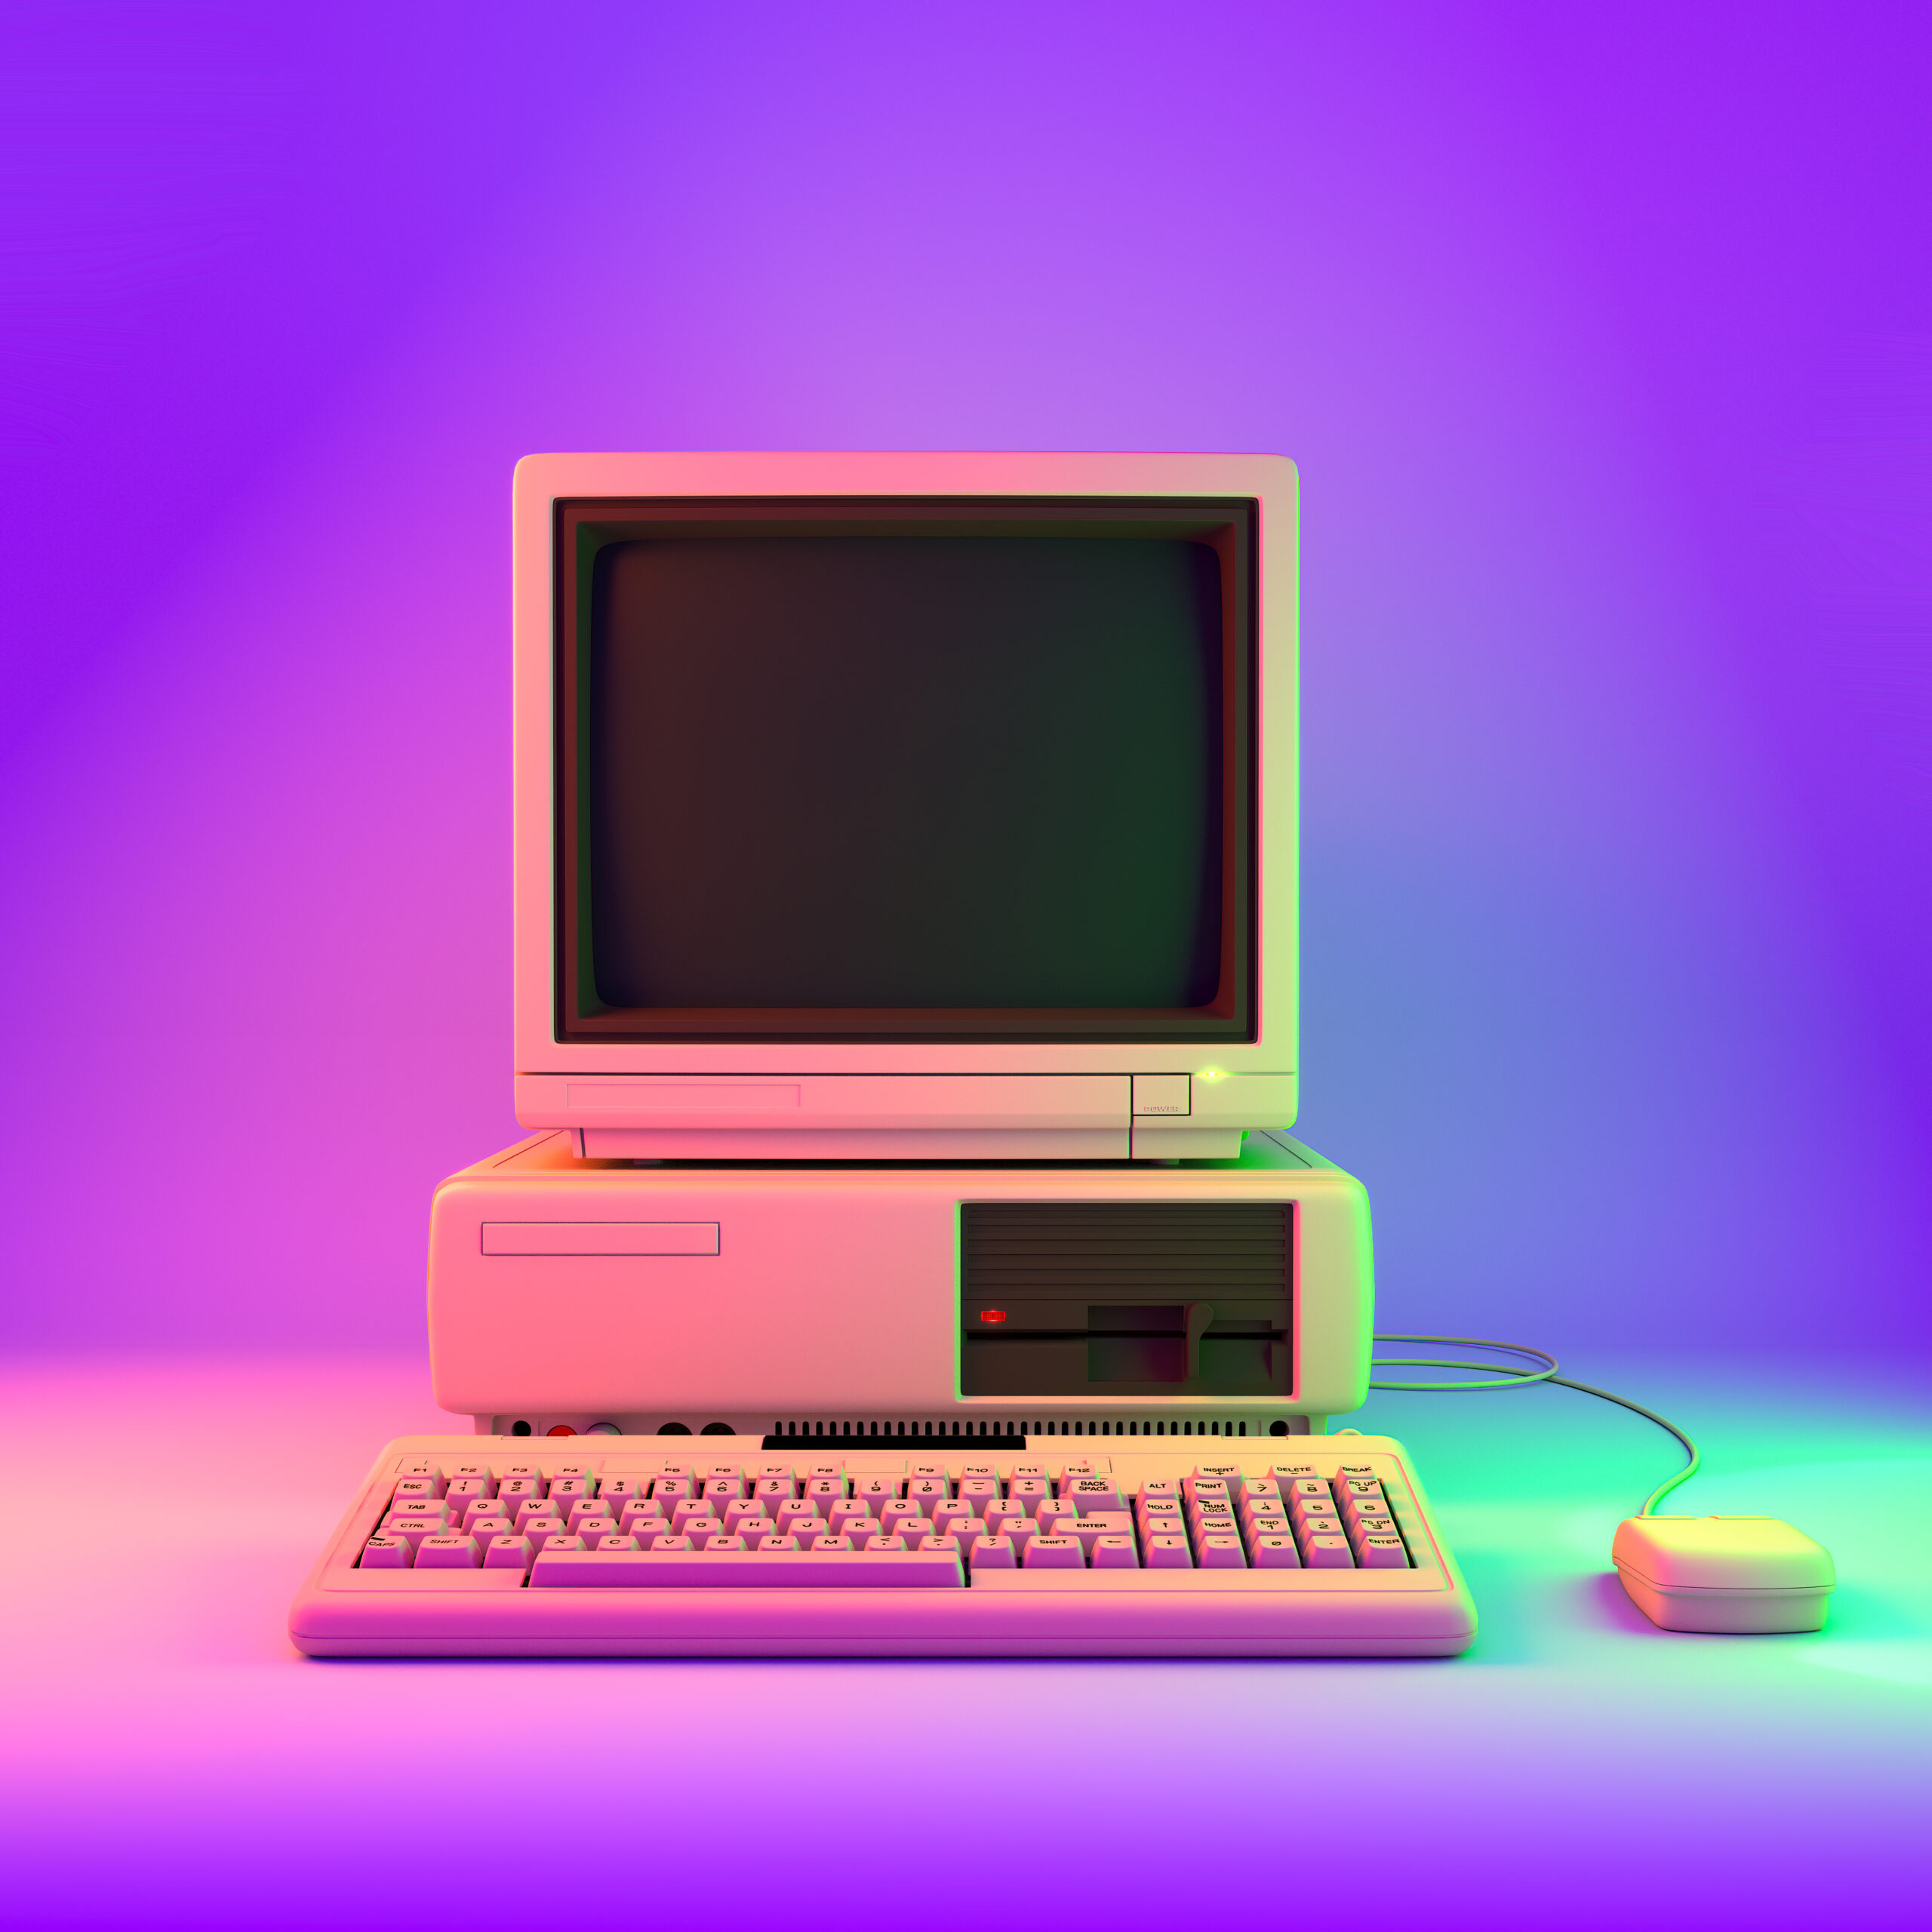 Blank Screen of an Old Desktop PC in Bright Retro Lighting Colors. 3D Rendering.